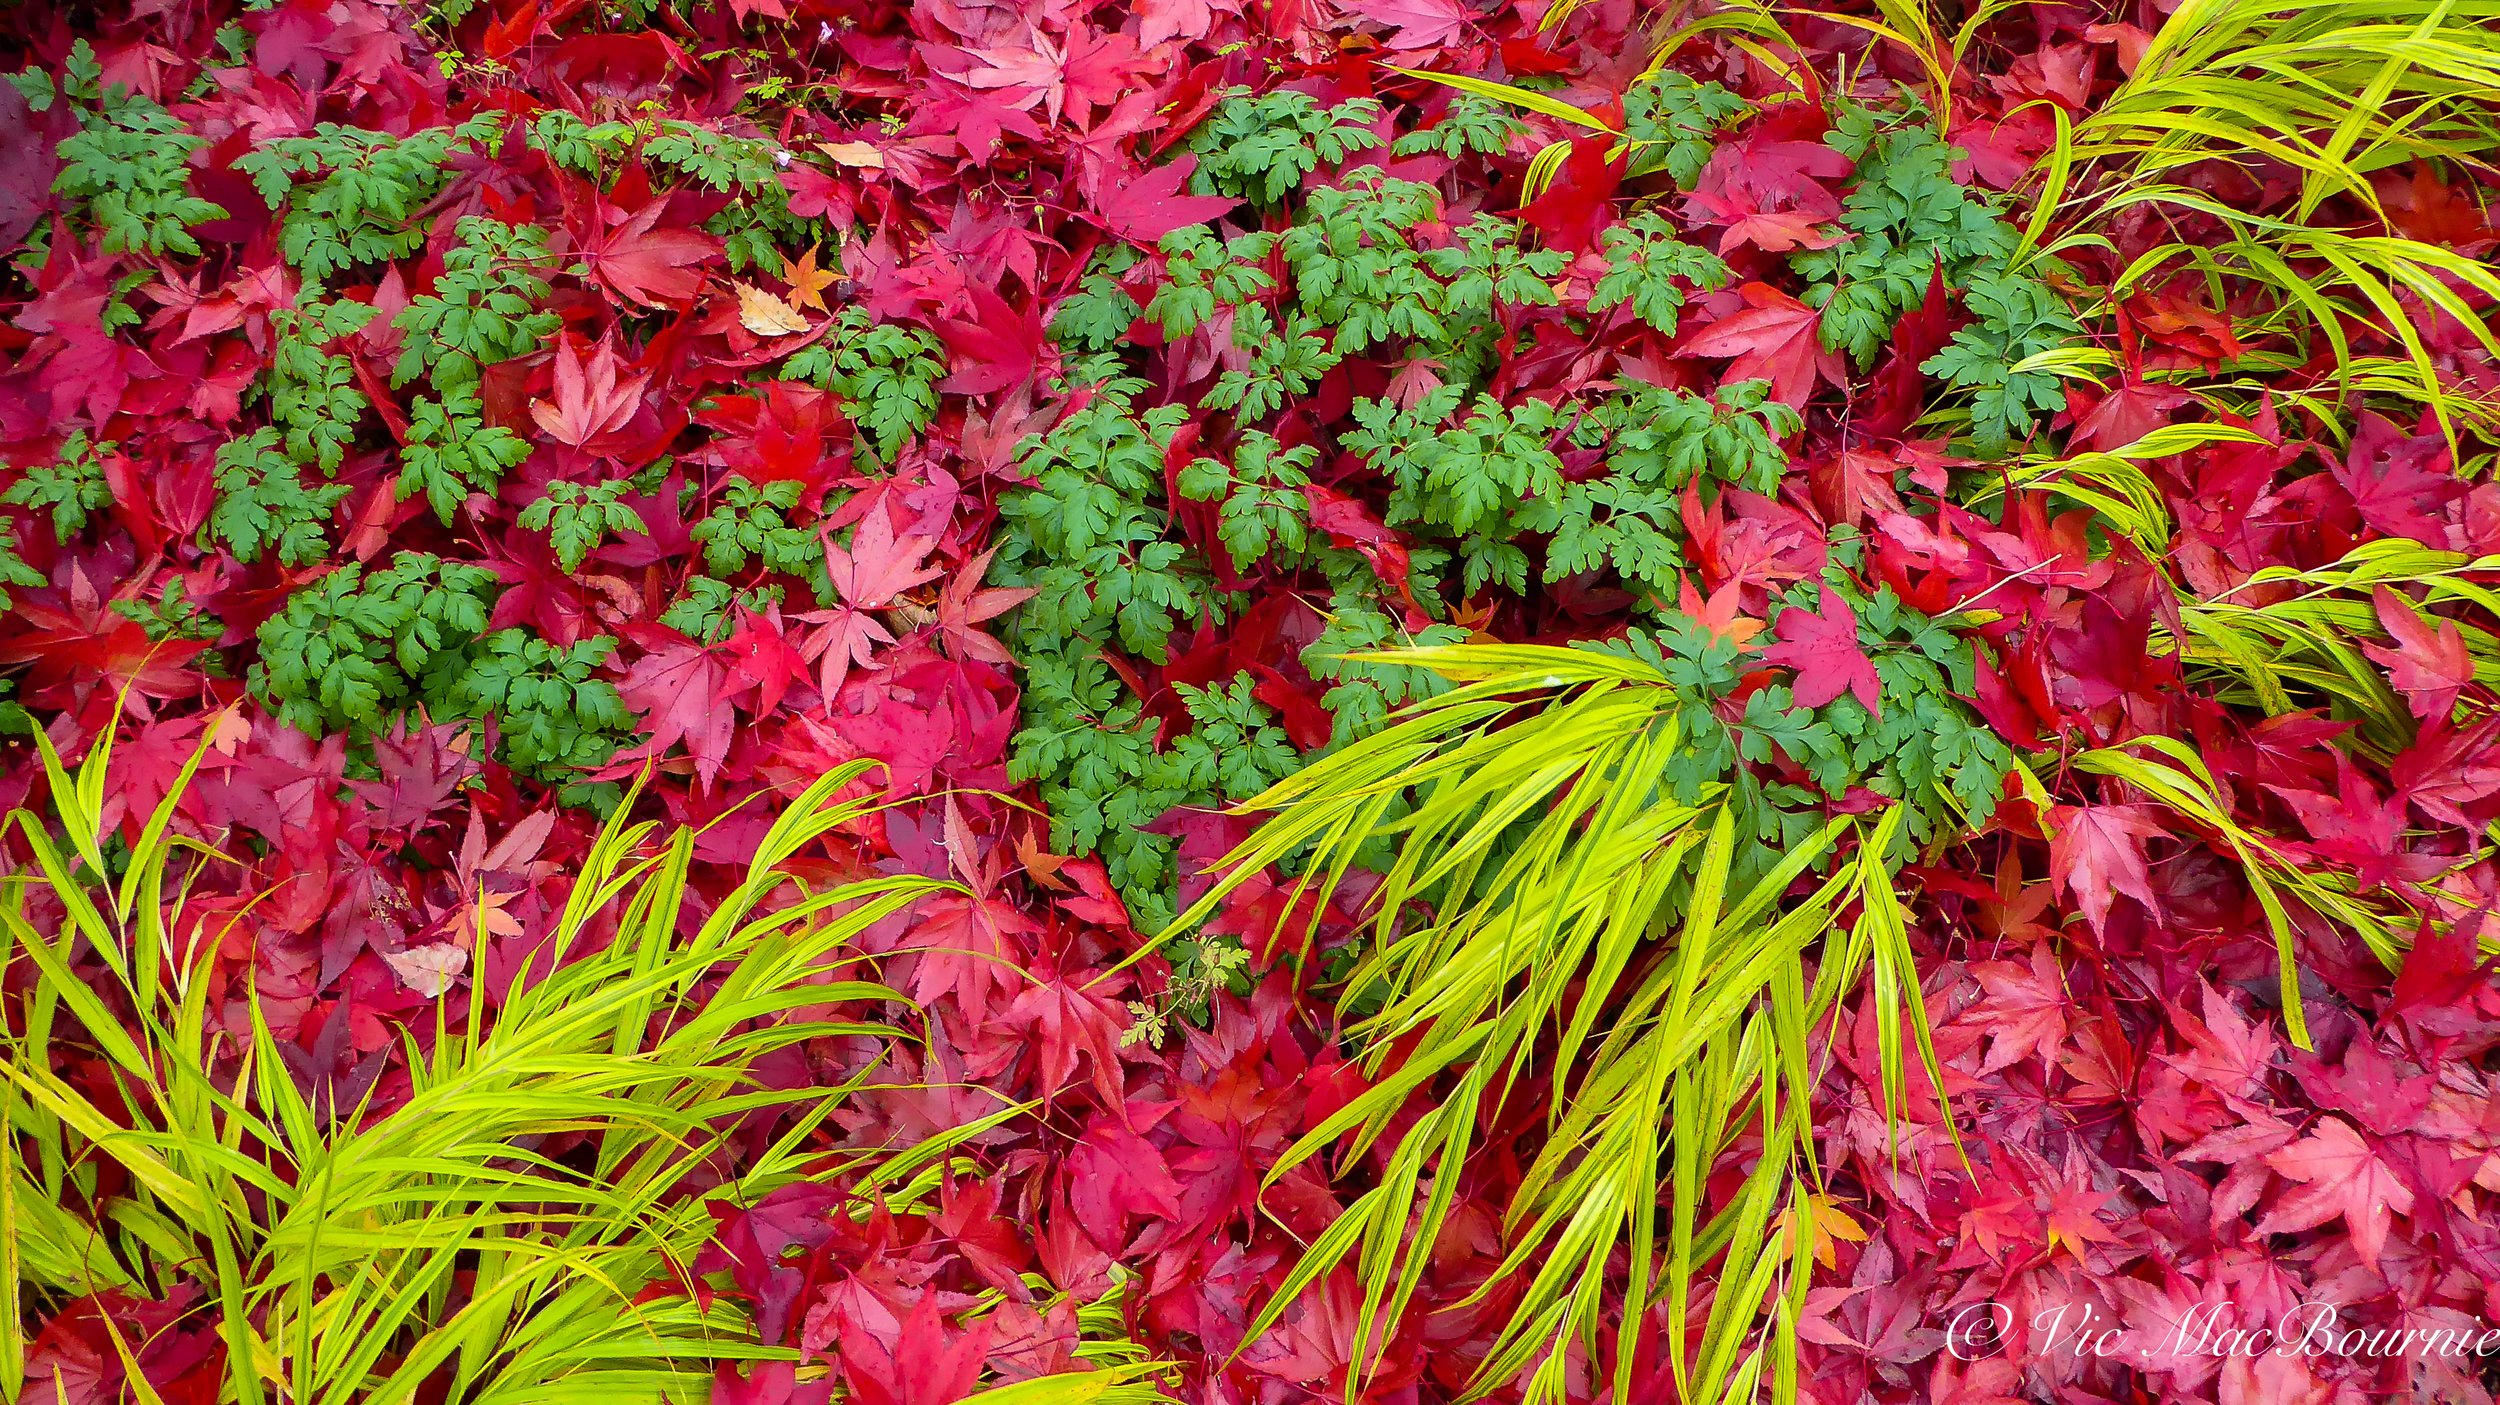 Vibrant fall-coloured Japanese Maple leaves cover ornamental grasses.